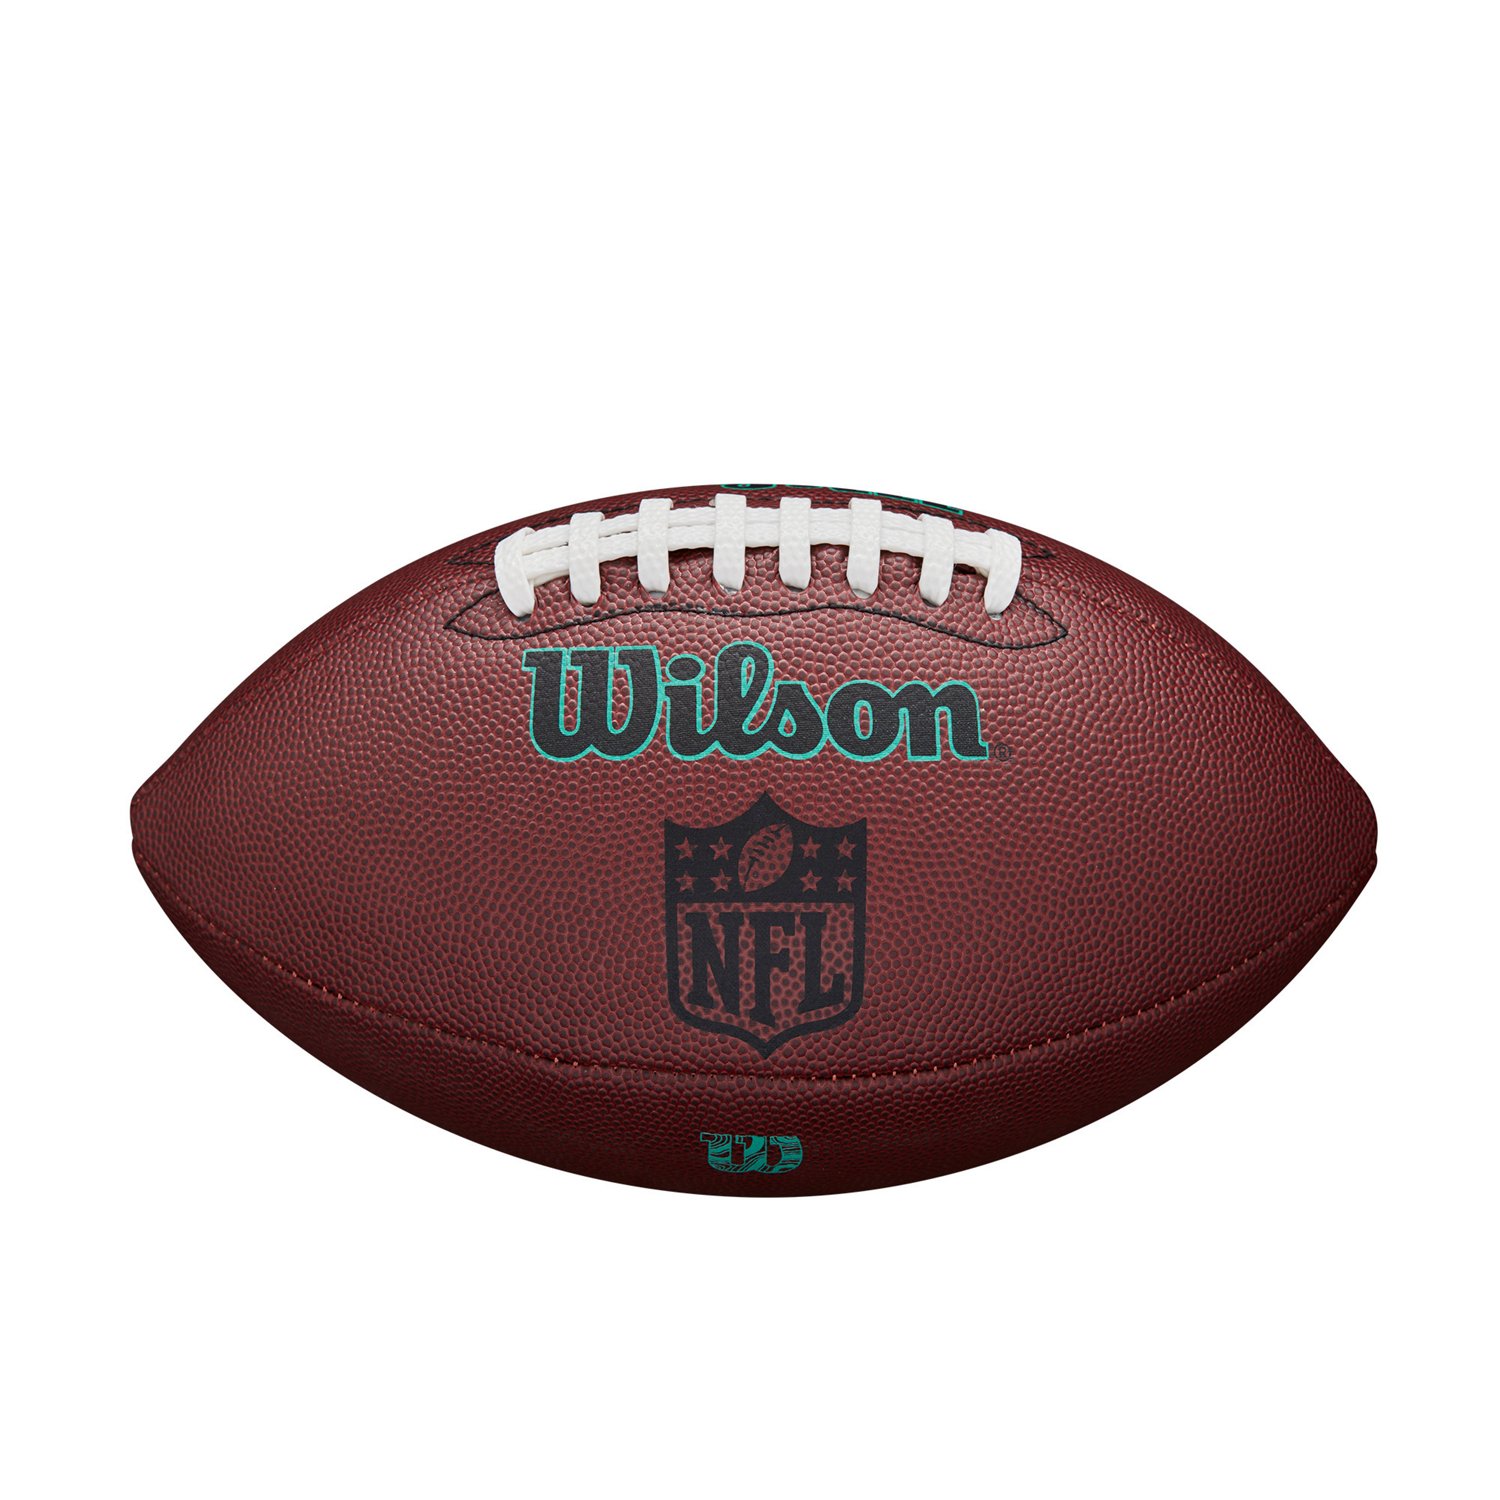 Wilson NFL Ignition Pro Eco Football